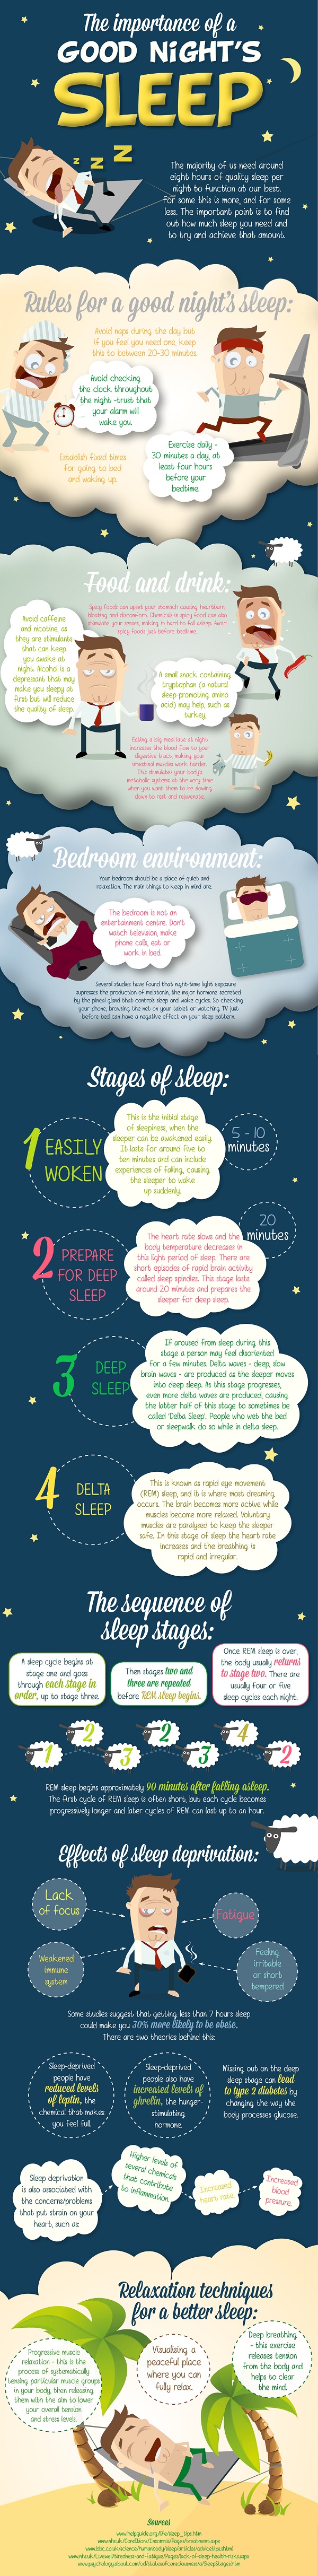 The Importance of a good night's sleep